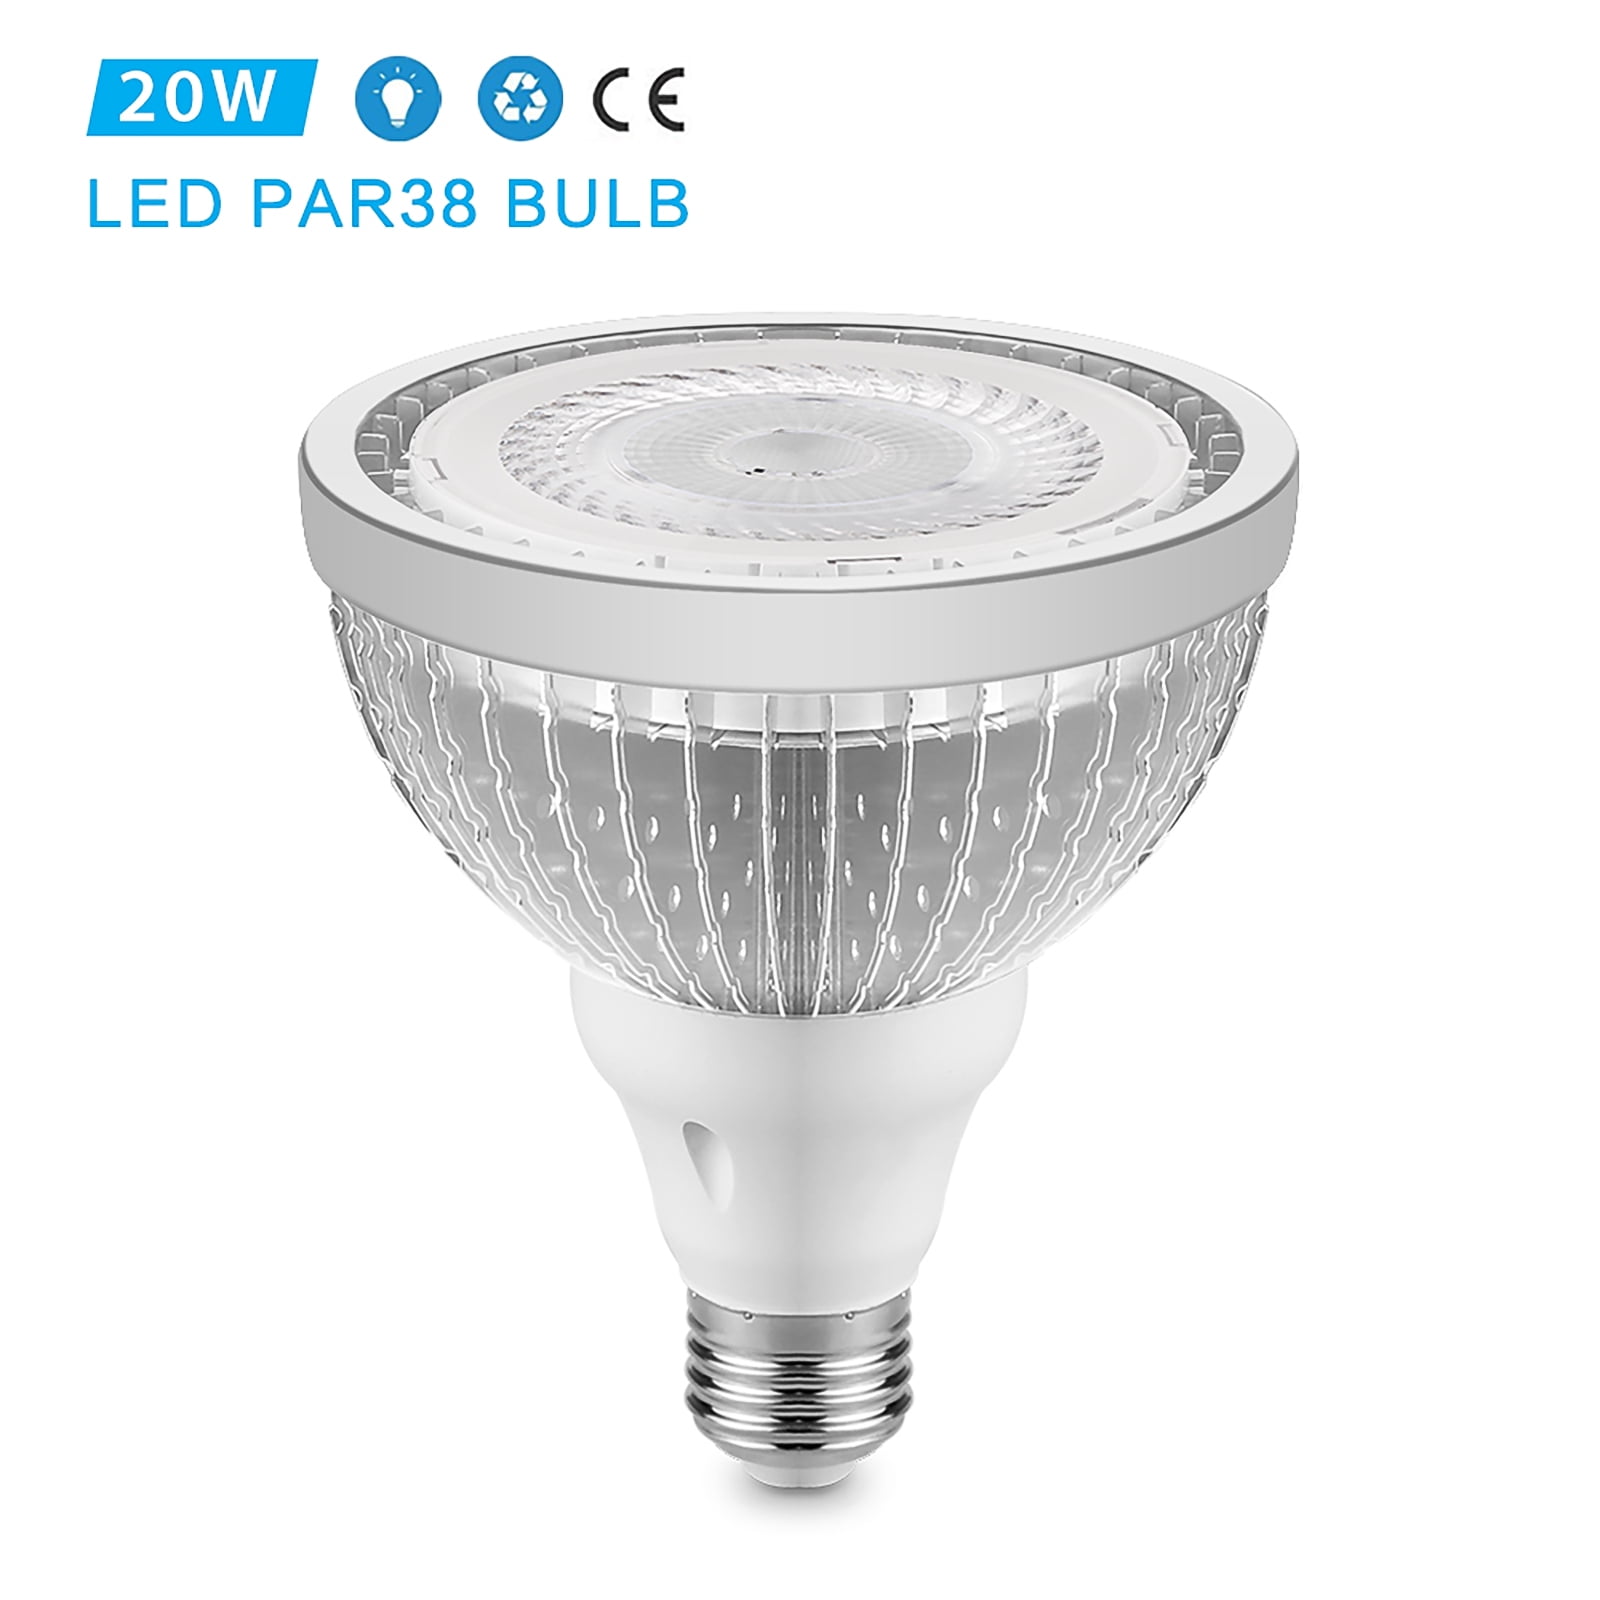 Toma 20W E27 COB LED PAR38 Spotlight Bulb Lamp Degree Beam Angle 6000-6500K 85-265V - Walmart.com